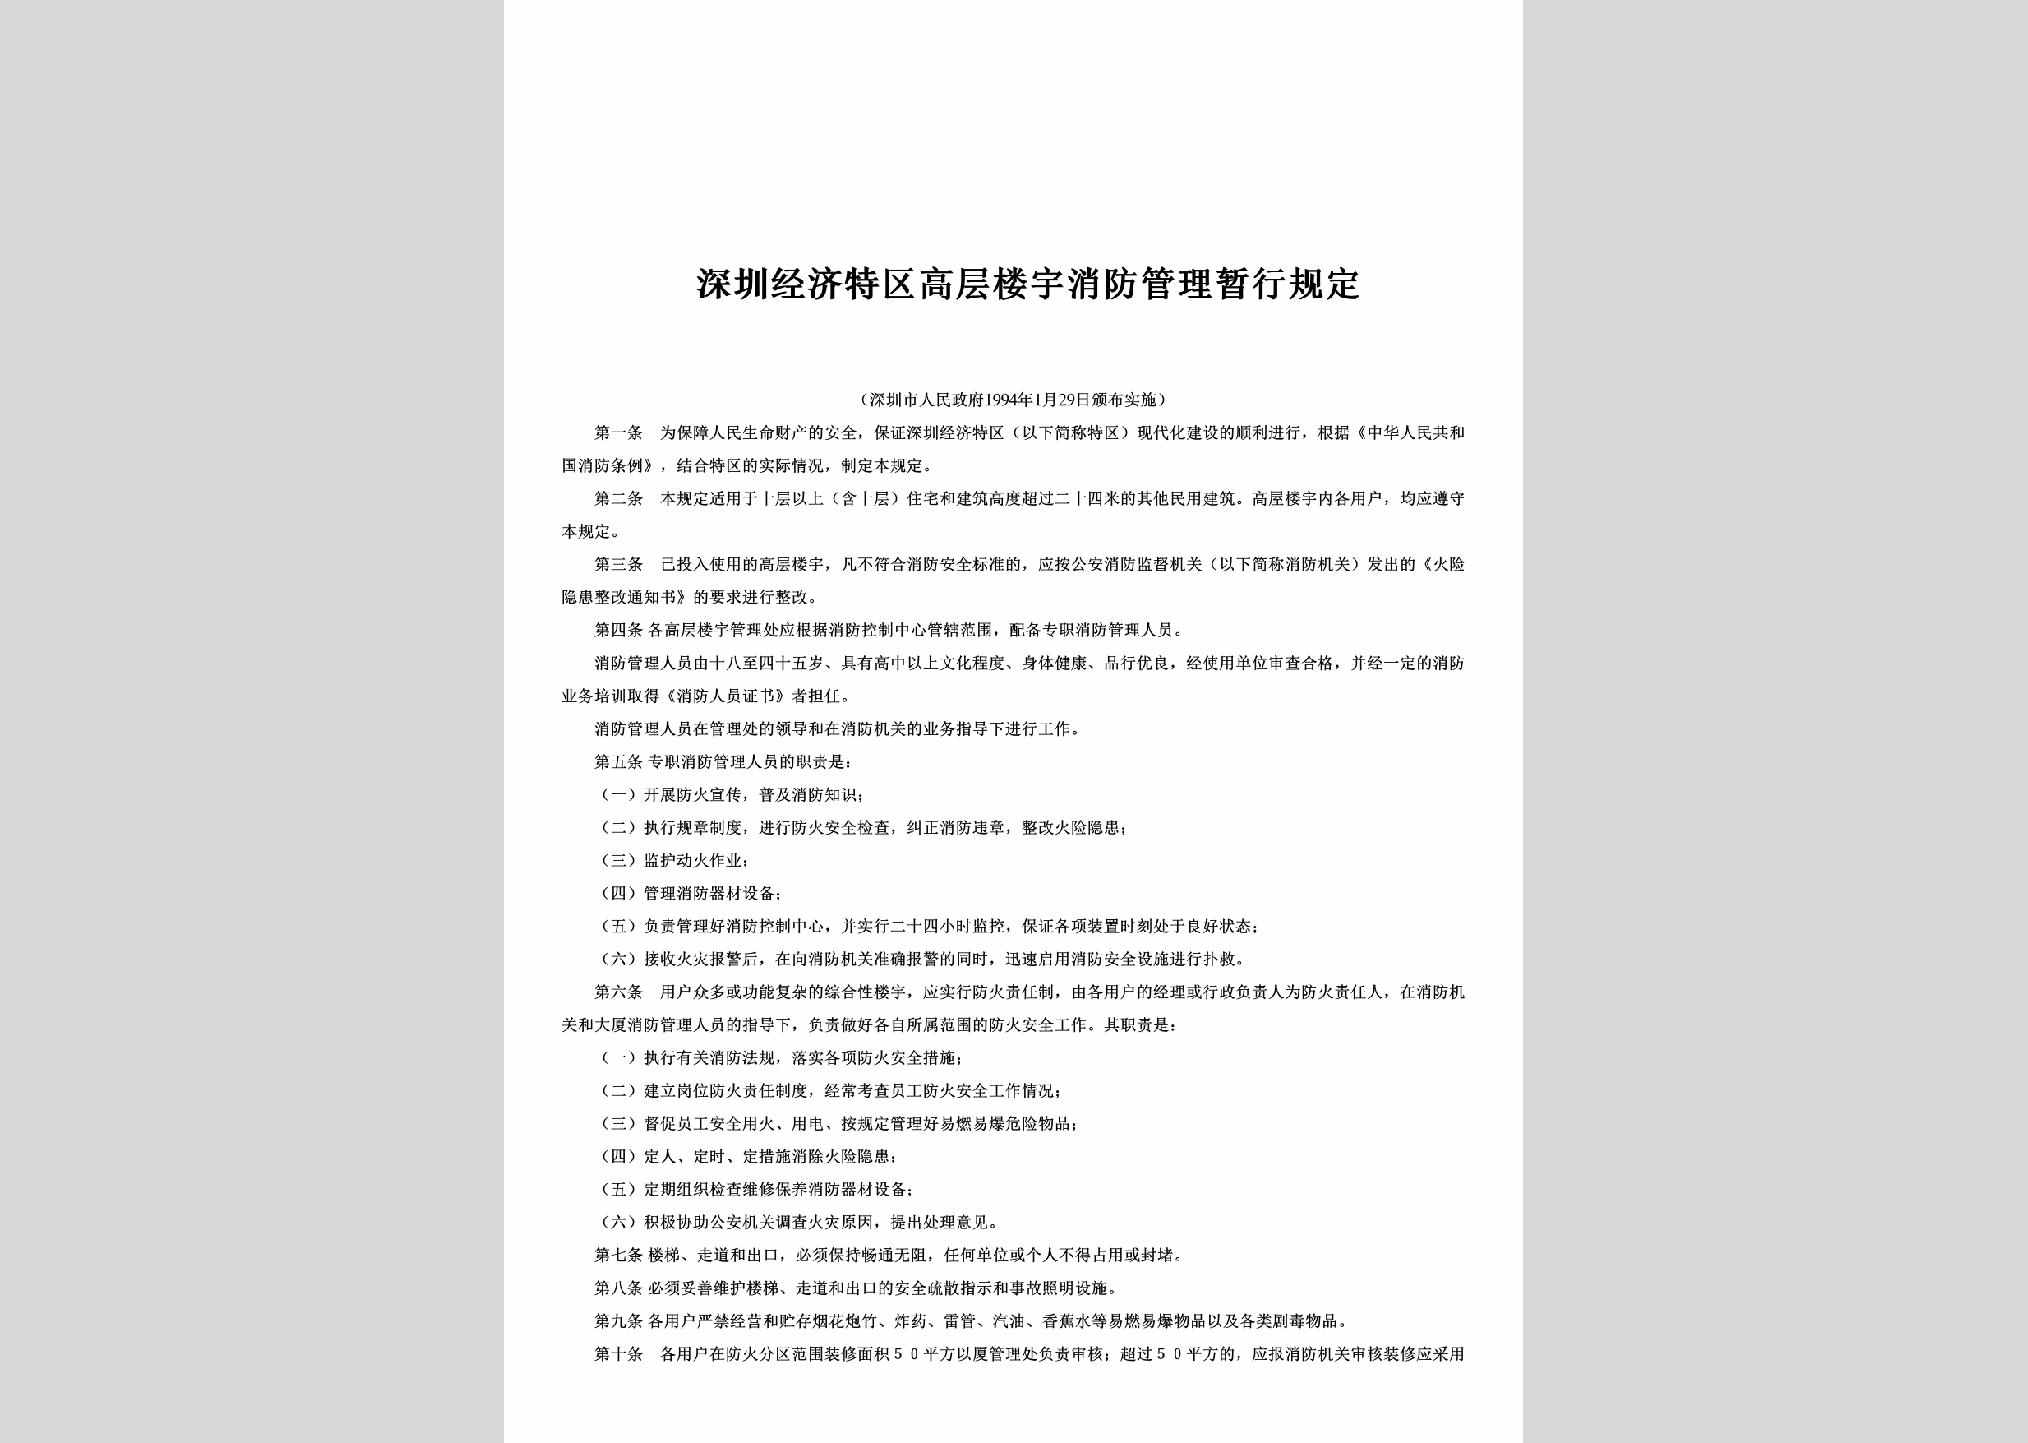 GD-GCLXFGD-1994：深圳经济特区高层楼宇消防管理暂行规定